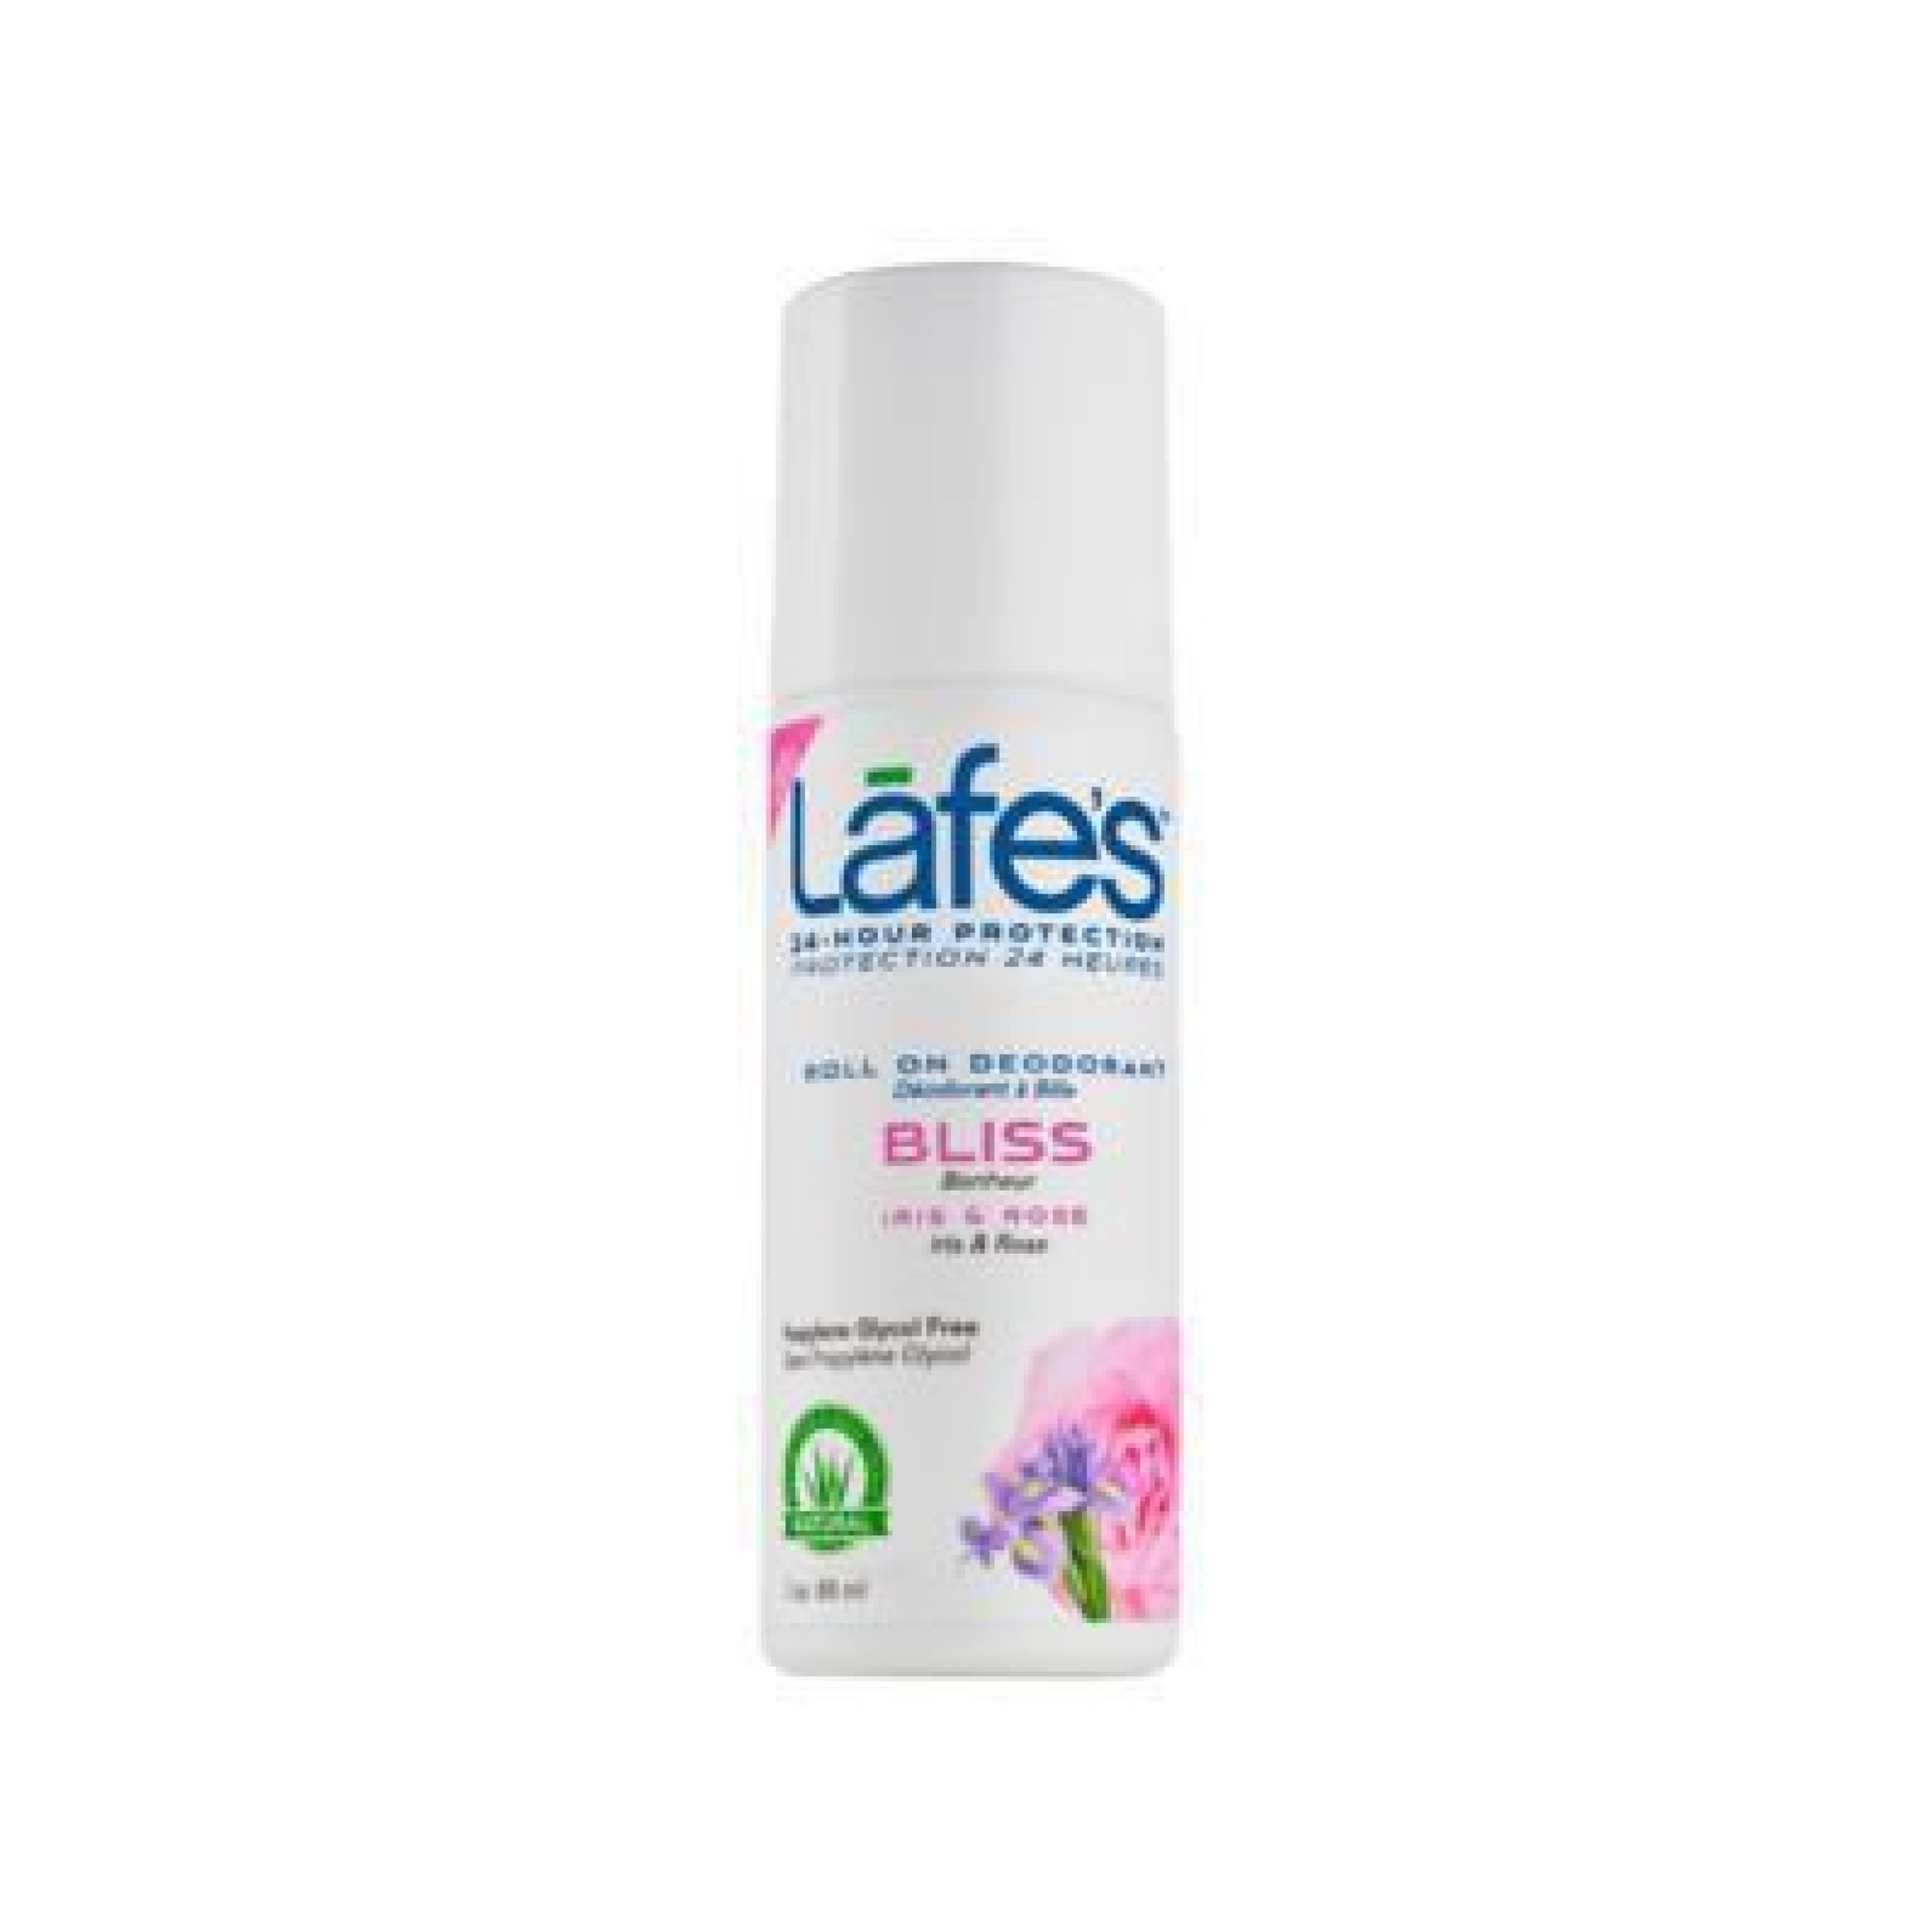 Lafe's Bliss Roll-On Deodorant 73ml